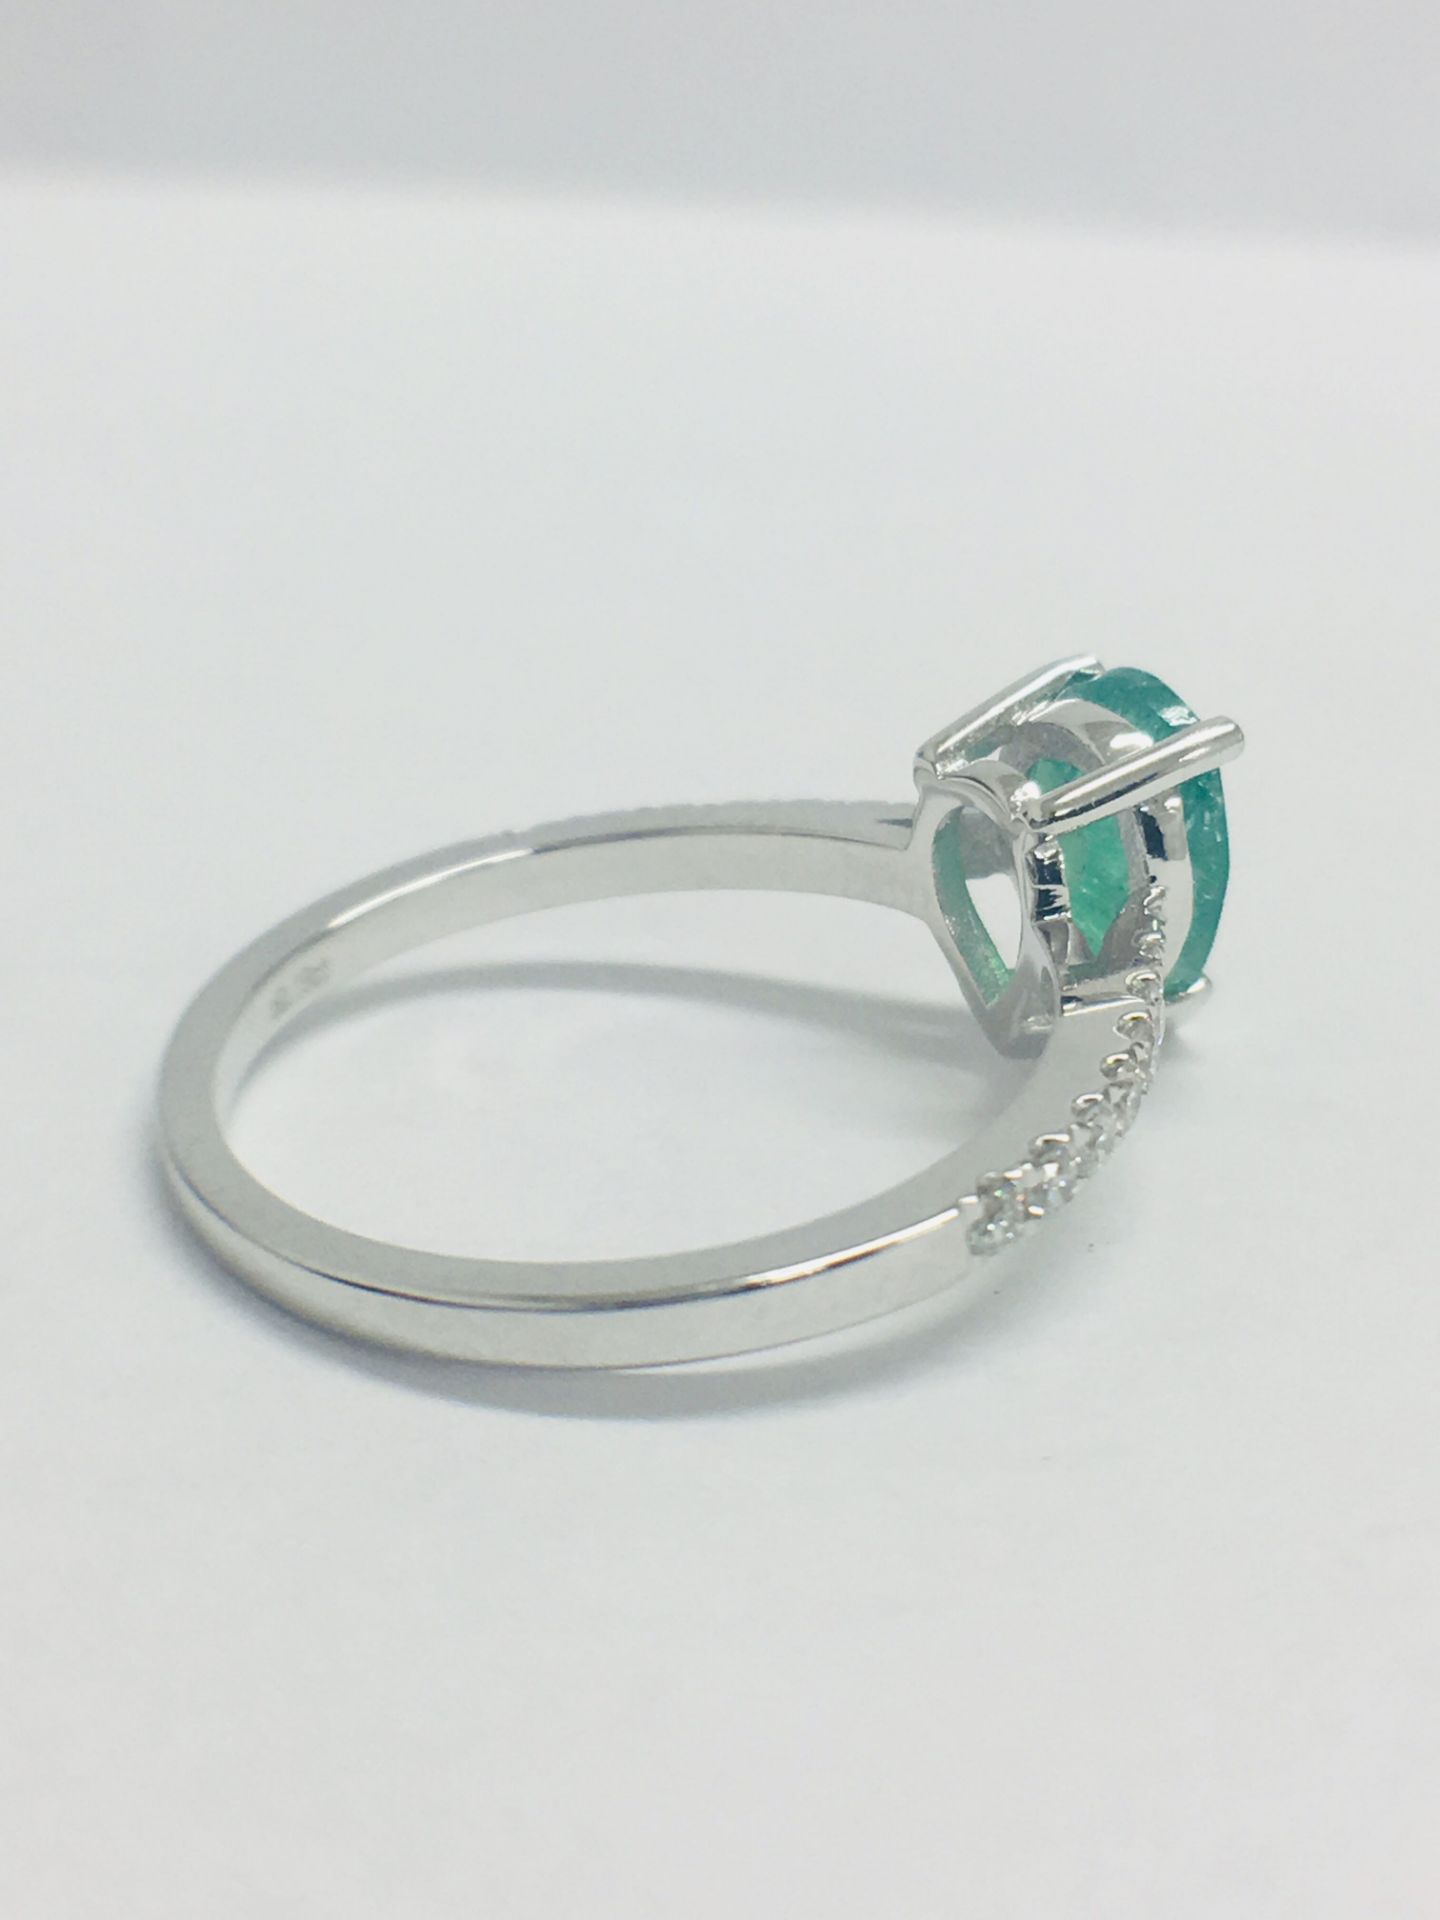 14ct White Gold Emerald & Diamond Ring - Image 6 of 10